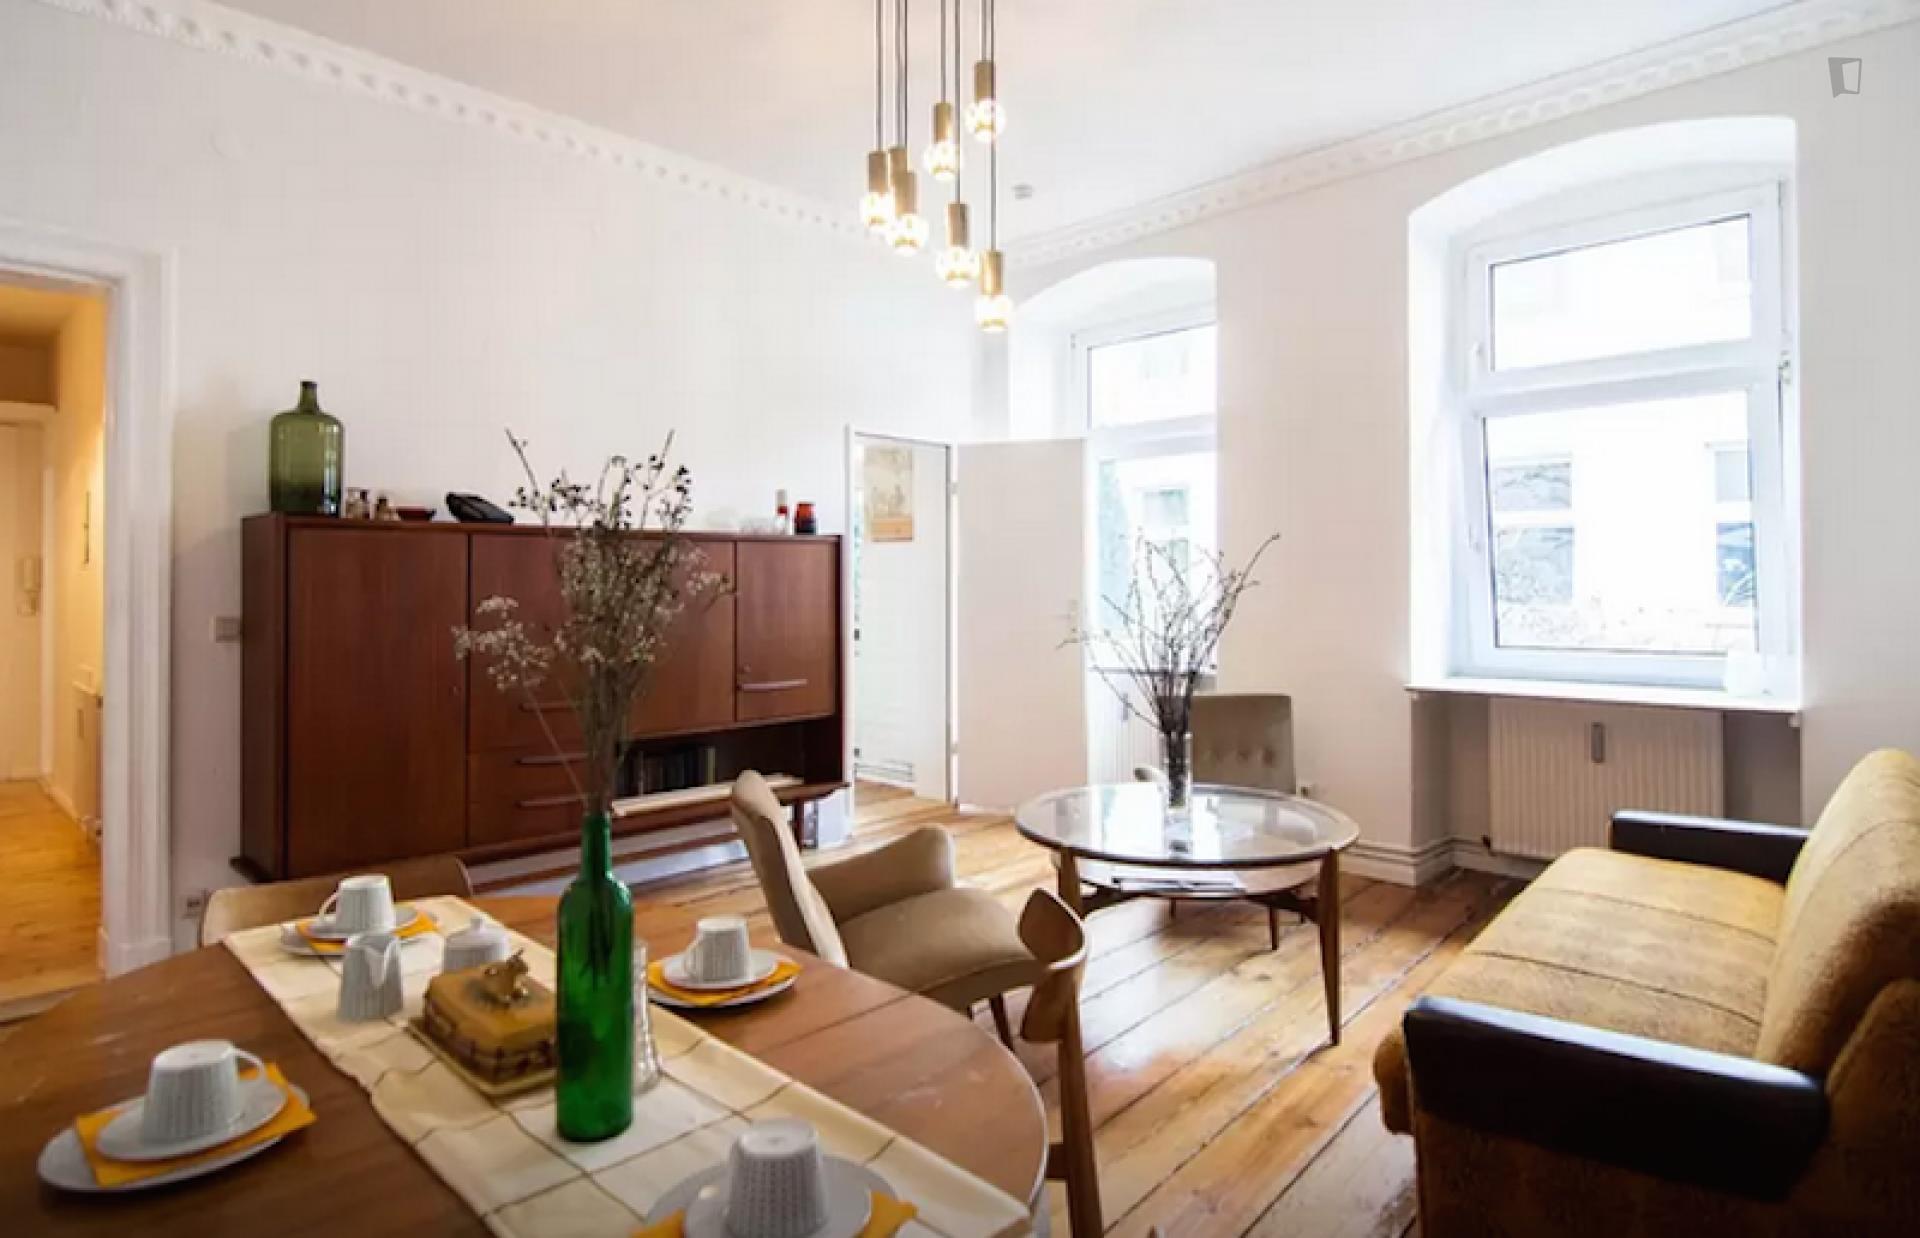 Gorlit - Expat apartment in Berlin